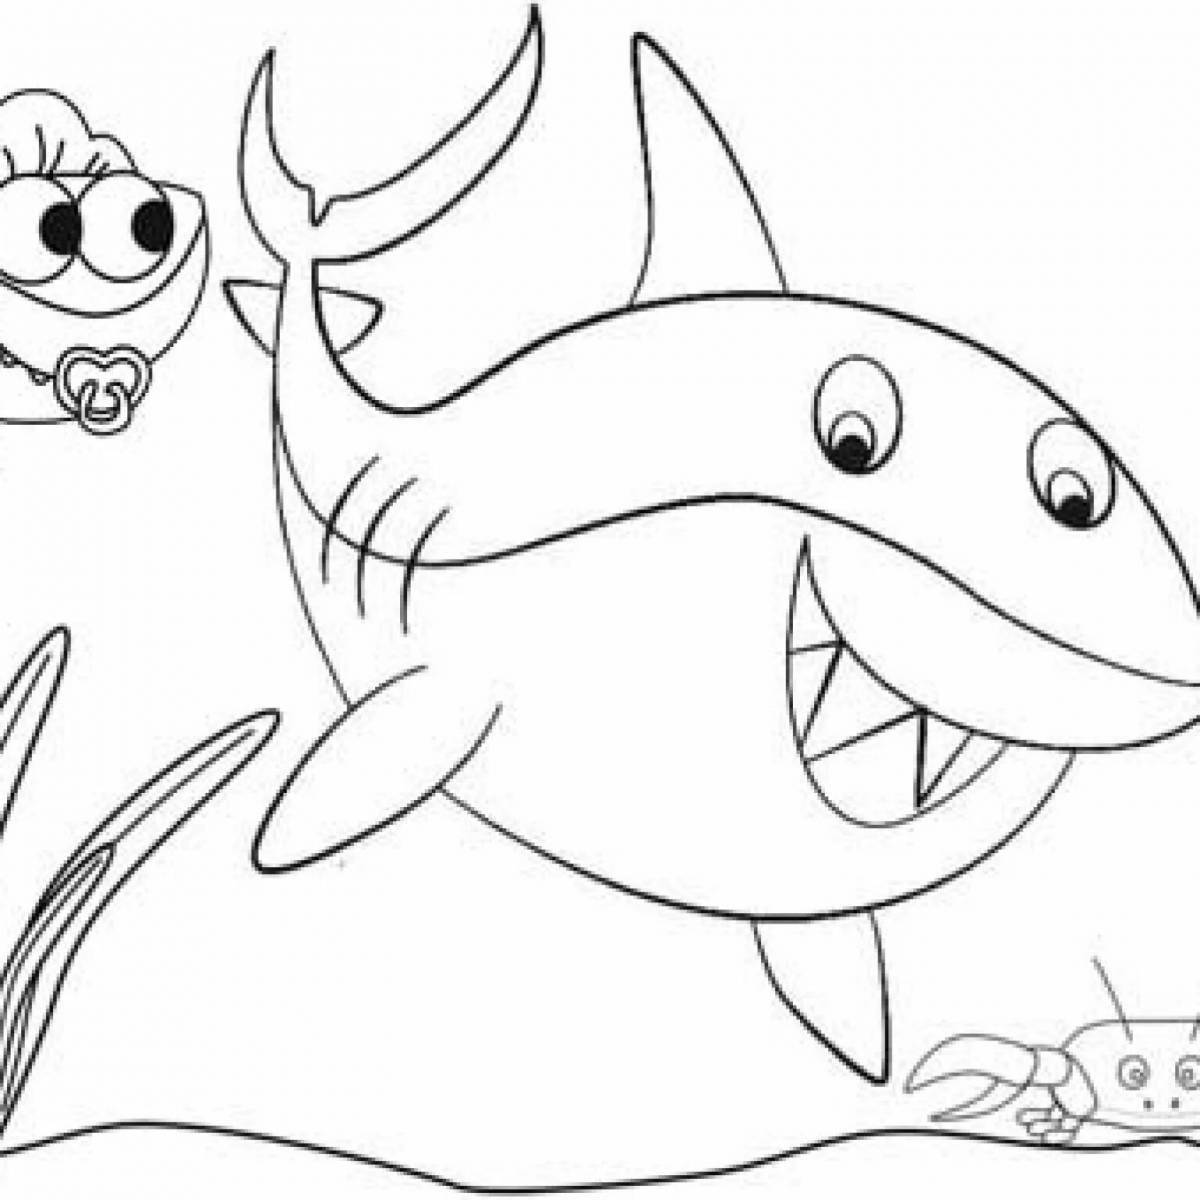 Amazing shark tururu coloring book